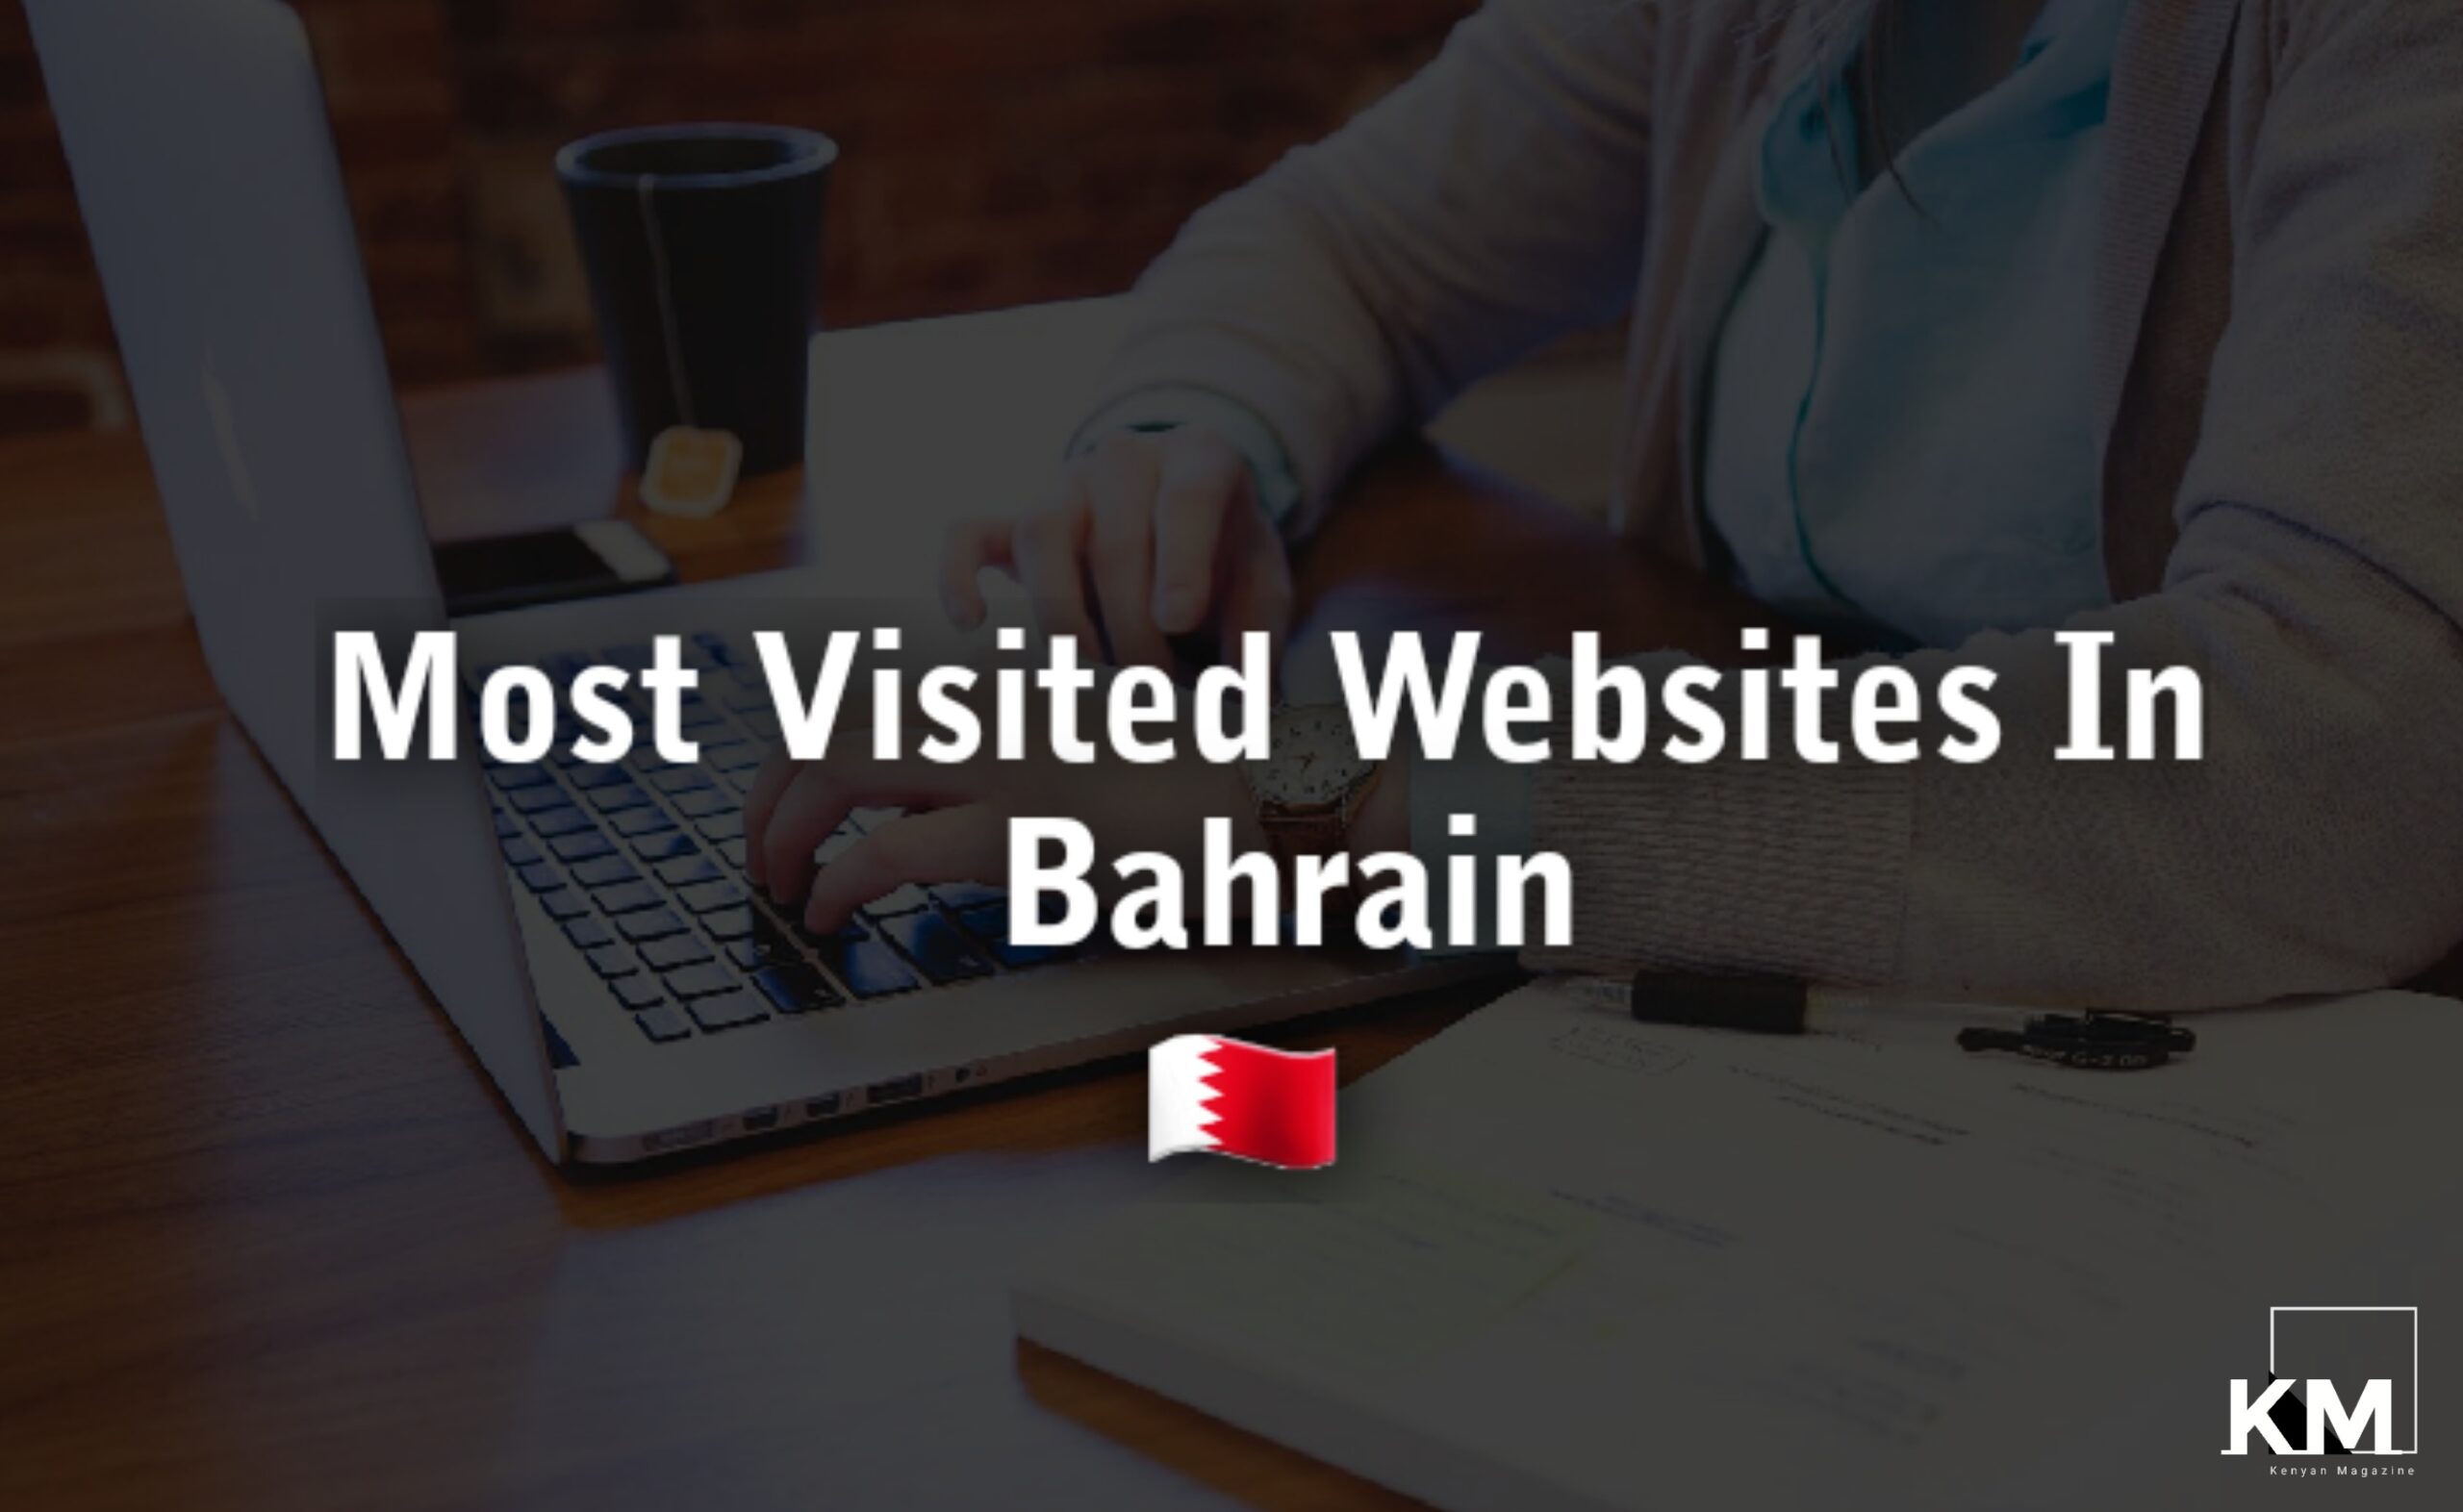 Most visited websites in Bahrain